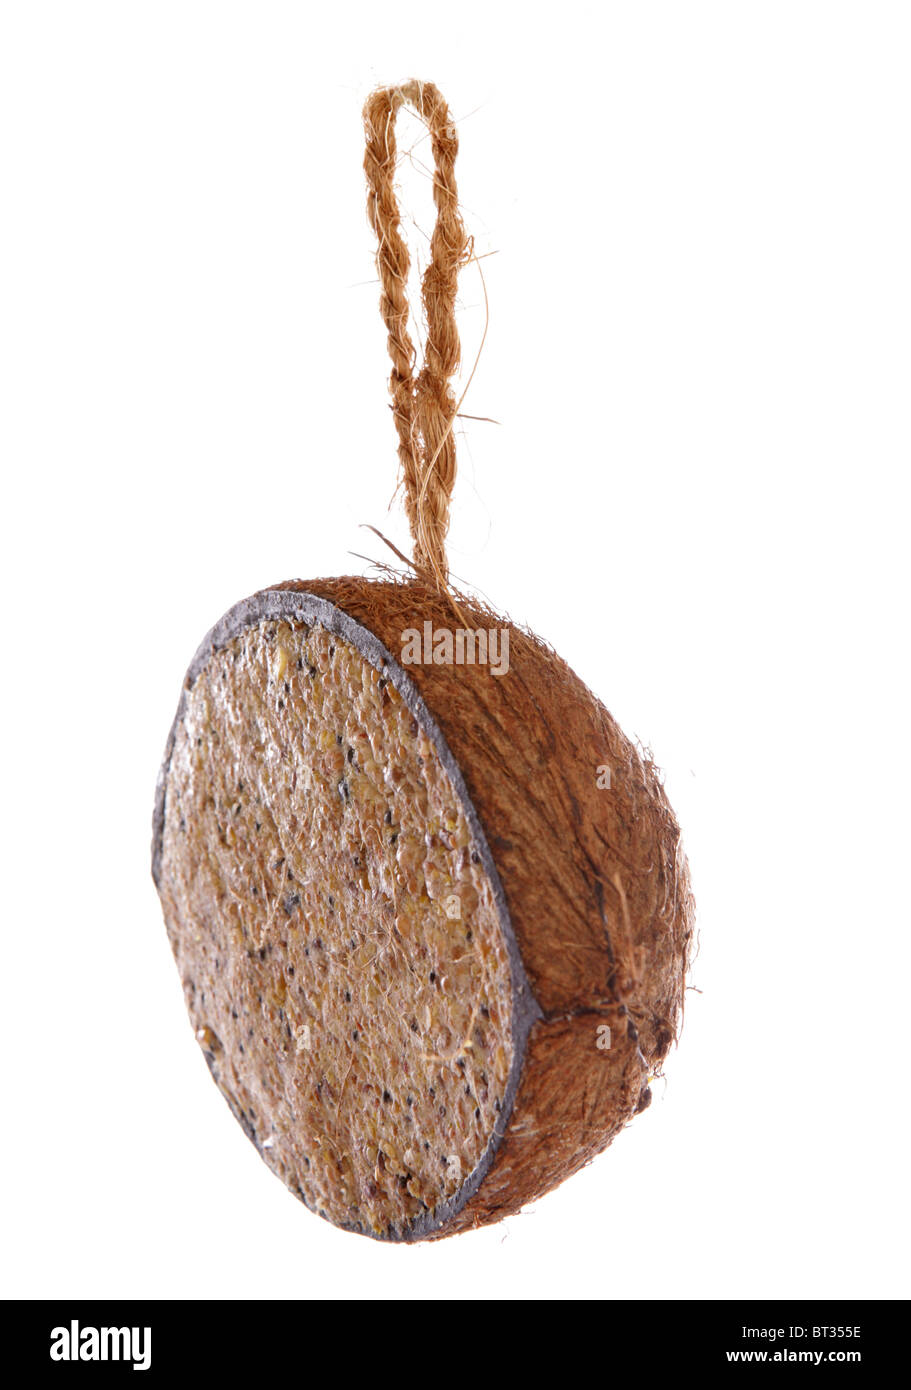 Kokosnuss gefüllt mit Vogel Saatgut Studio Ausschnitt Stockfoto